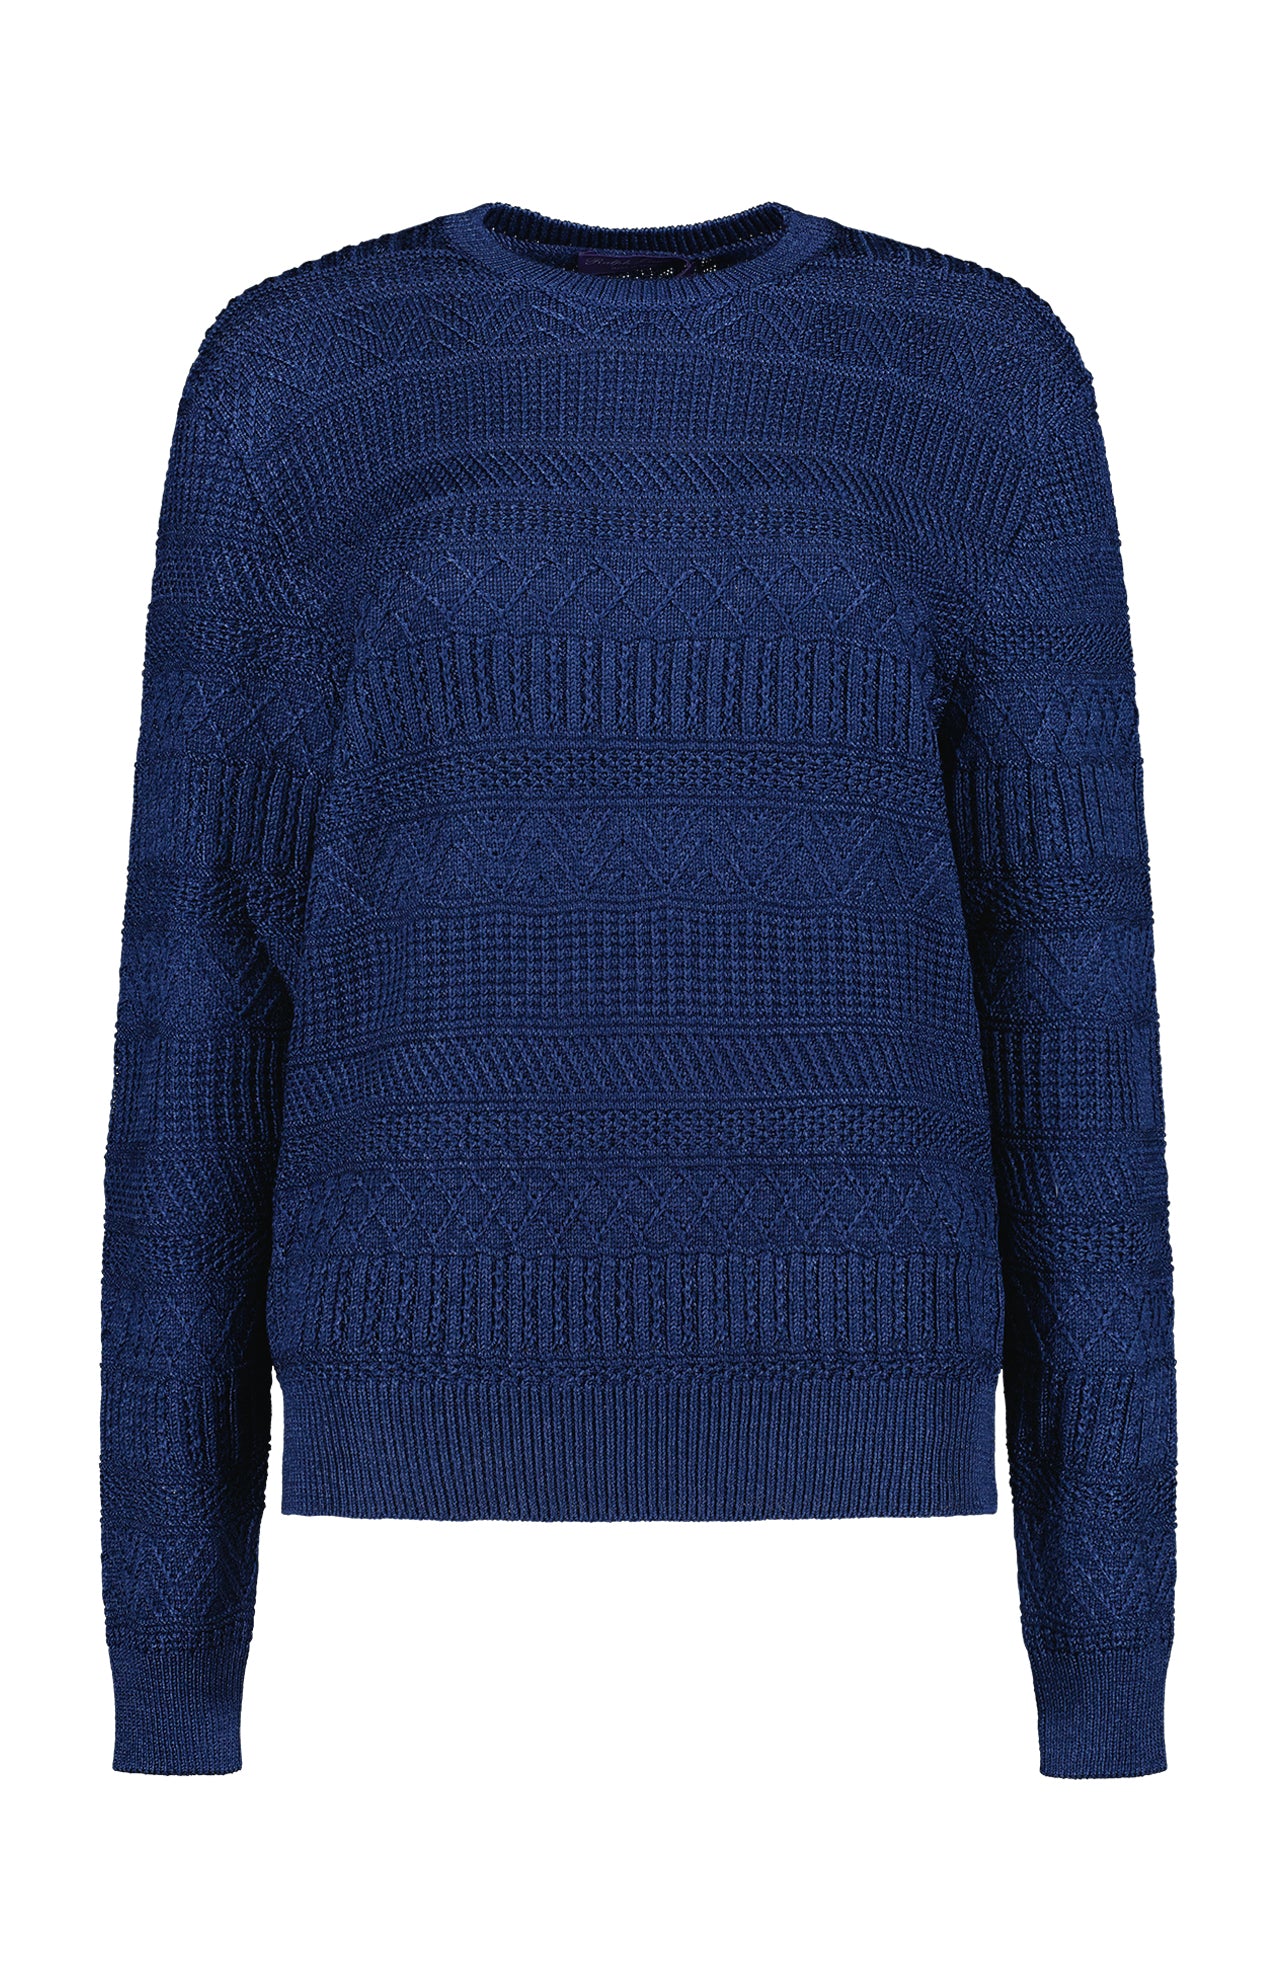 Long Sleeve Textured Sweater (7391598772339)